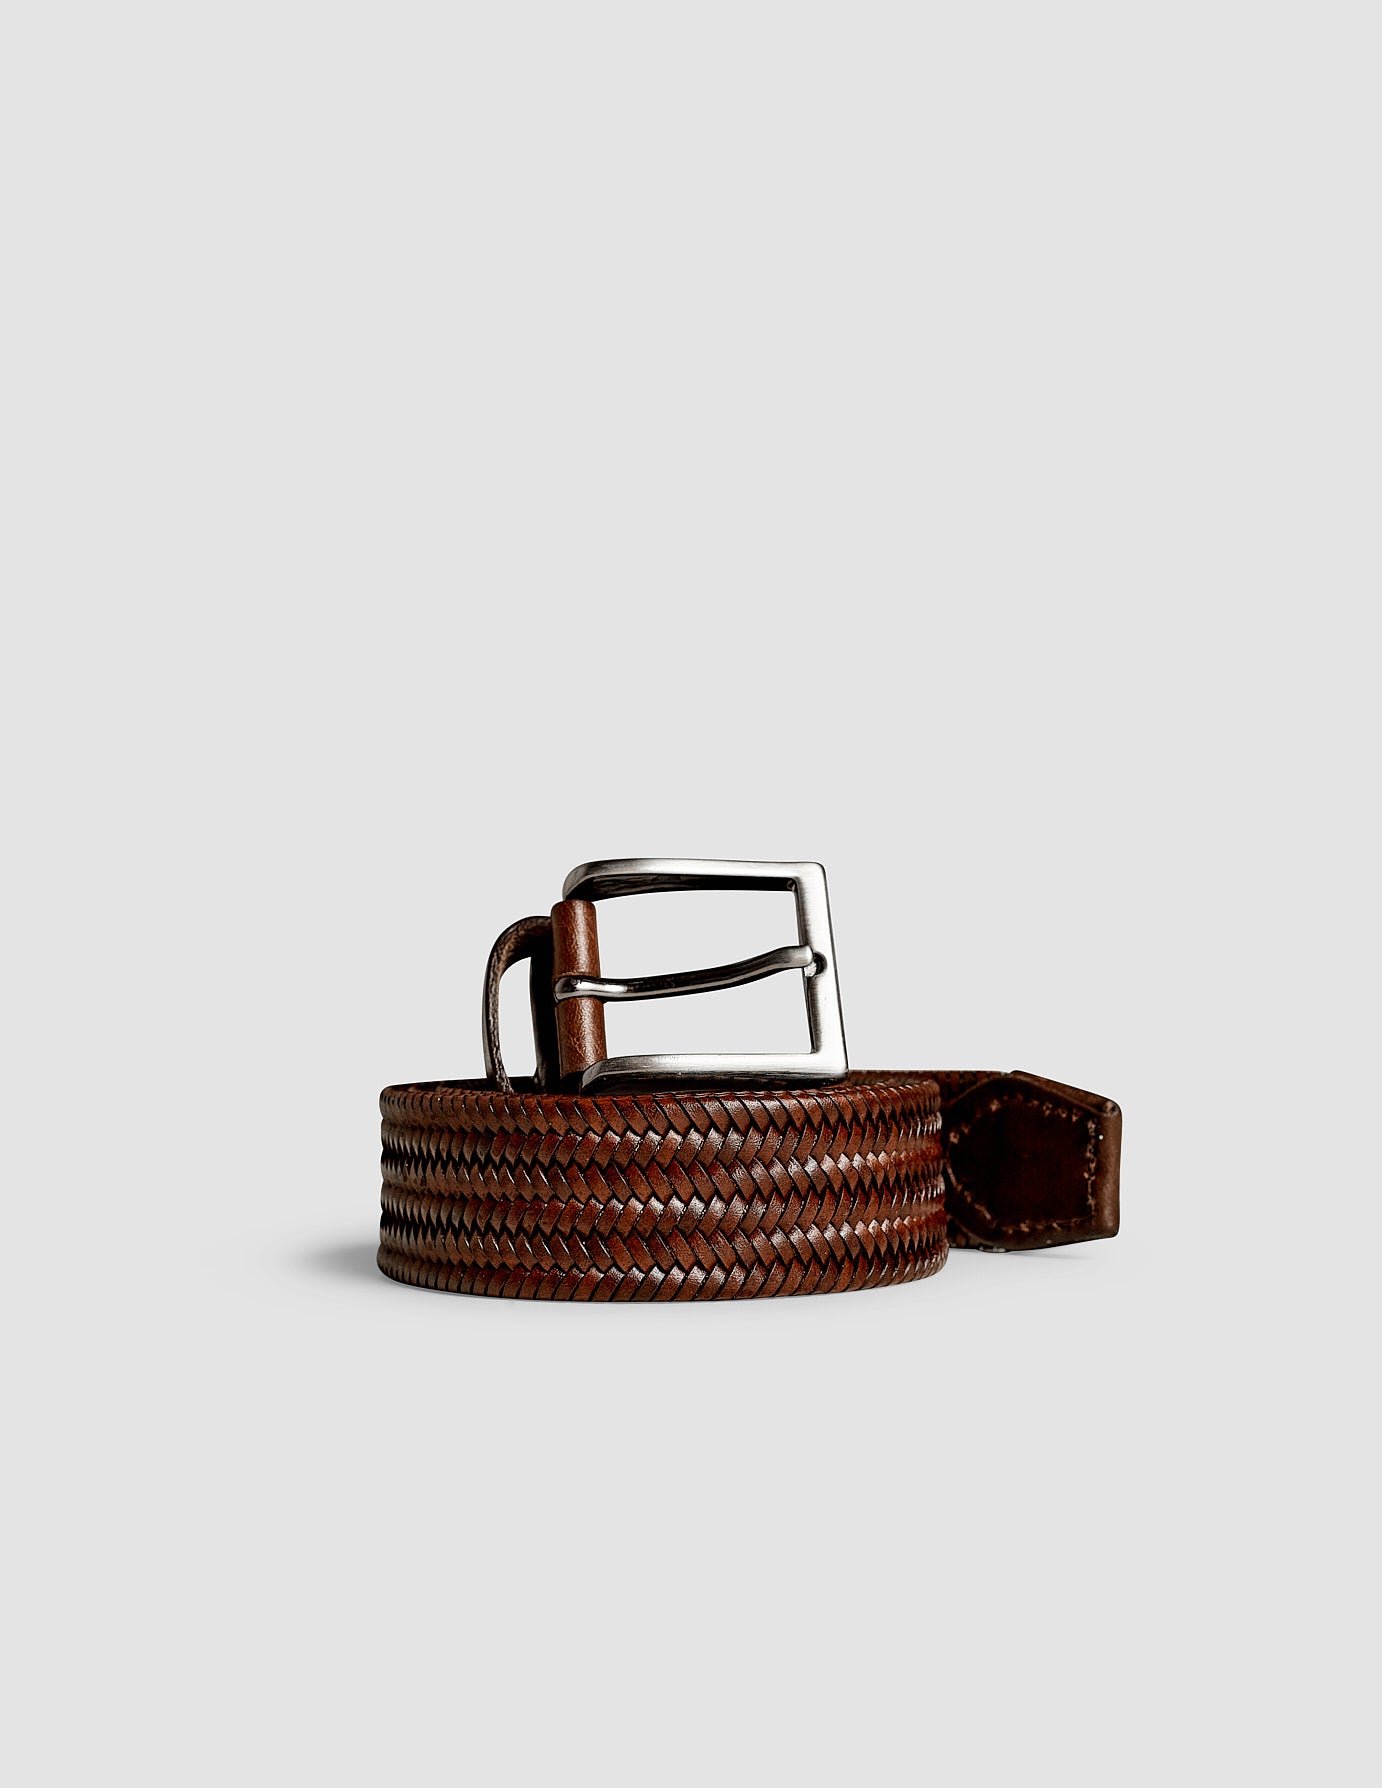 Braided Leather Belt Dark Brown | SHAPING NEW TOMORROW